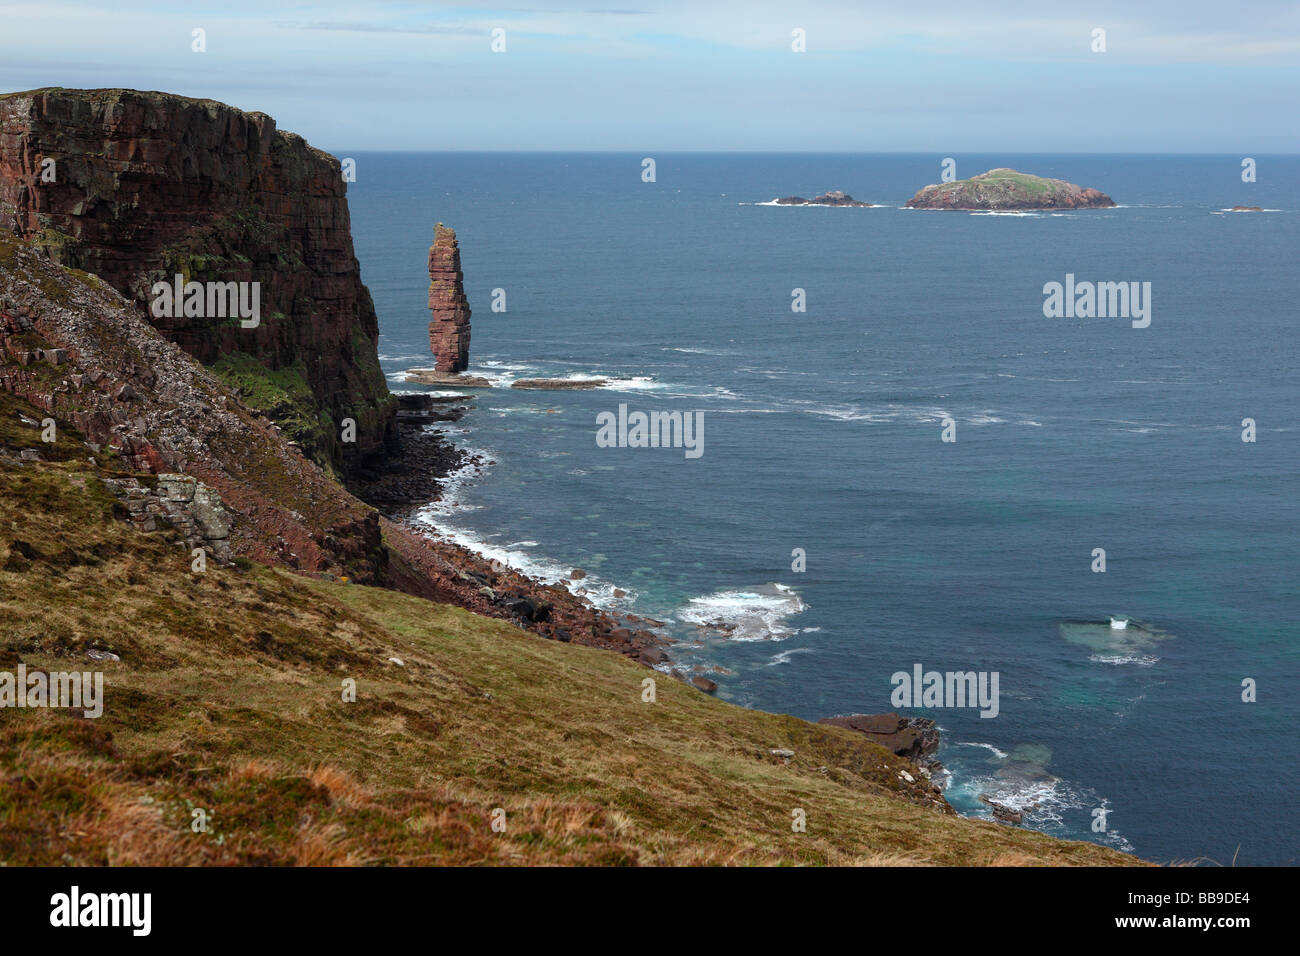 landmark sea stack Am Buachaille headland at Sandwood Bay Sutherland Northern Scotland Great Britain UK Stock Photo